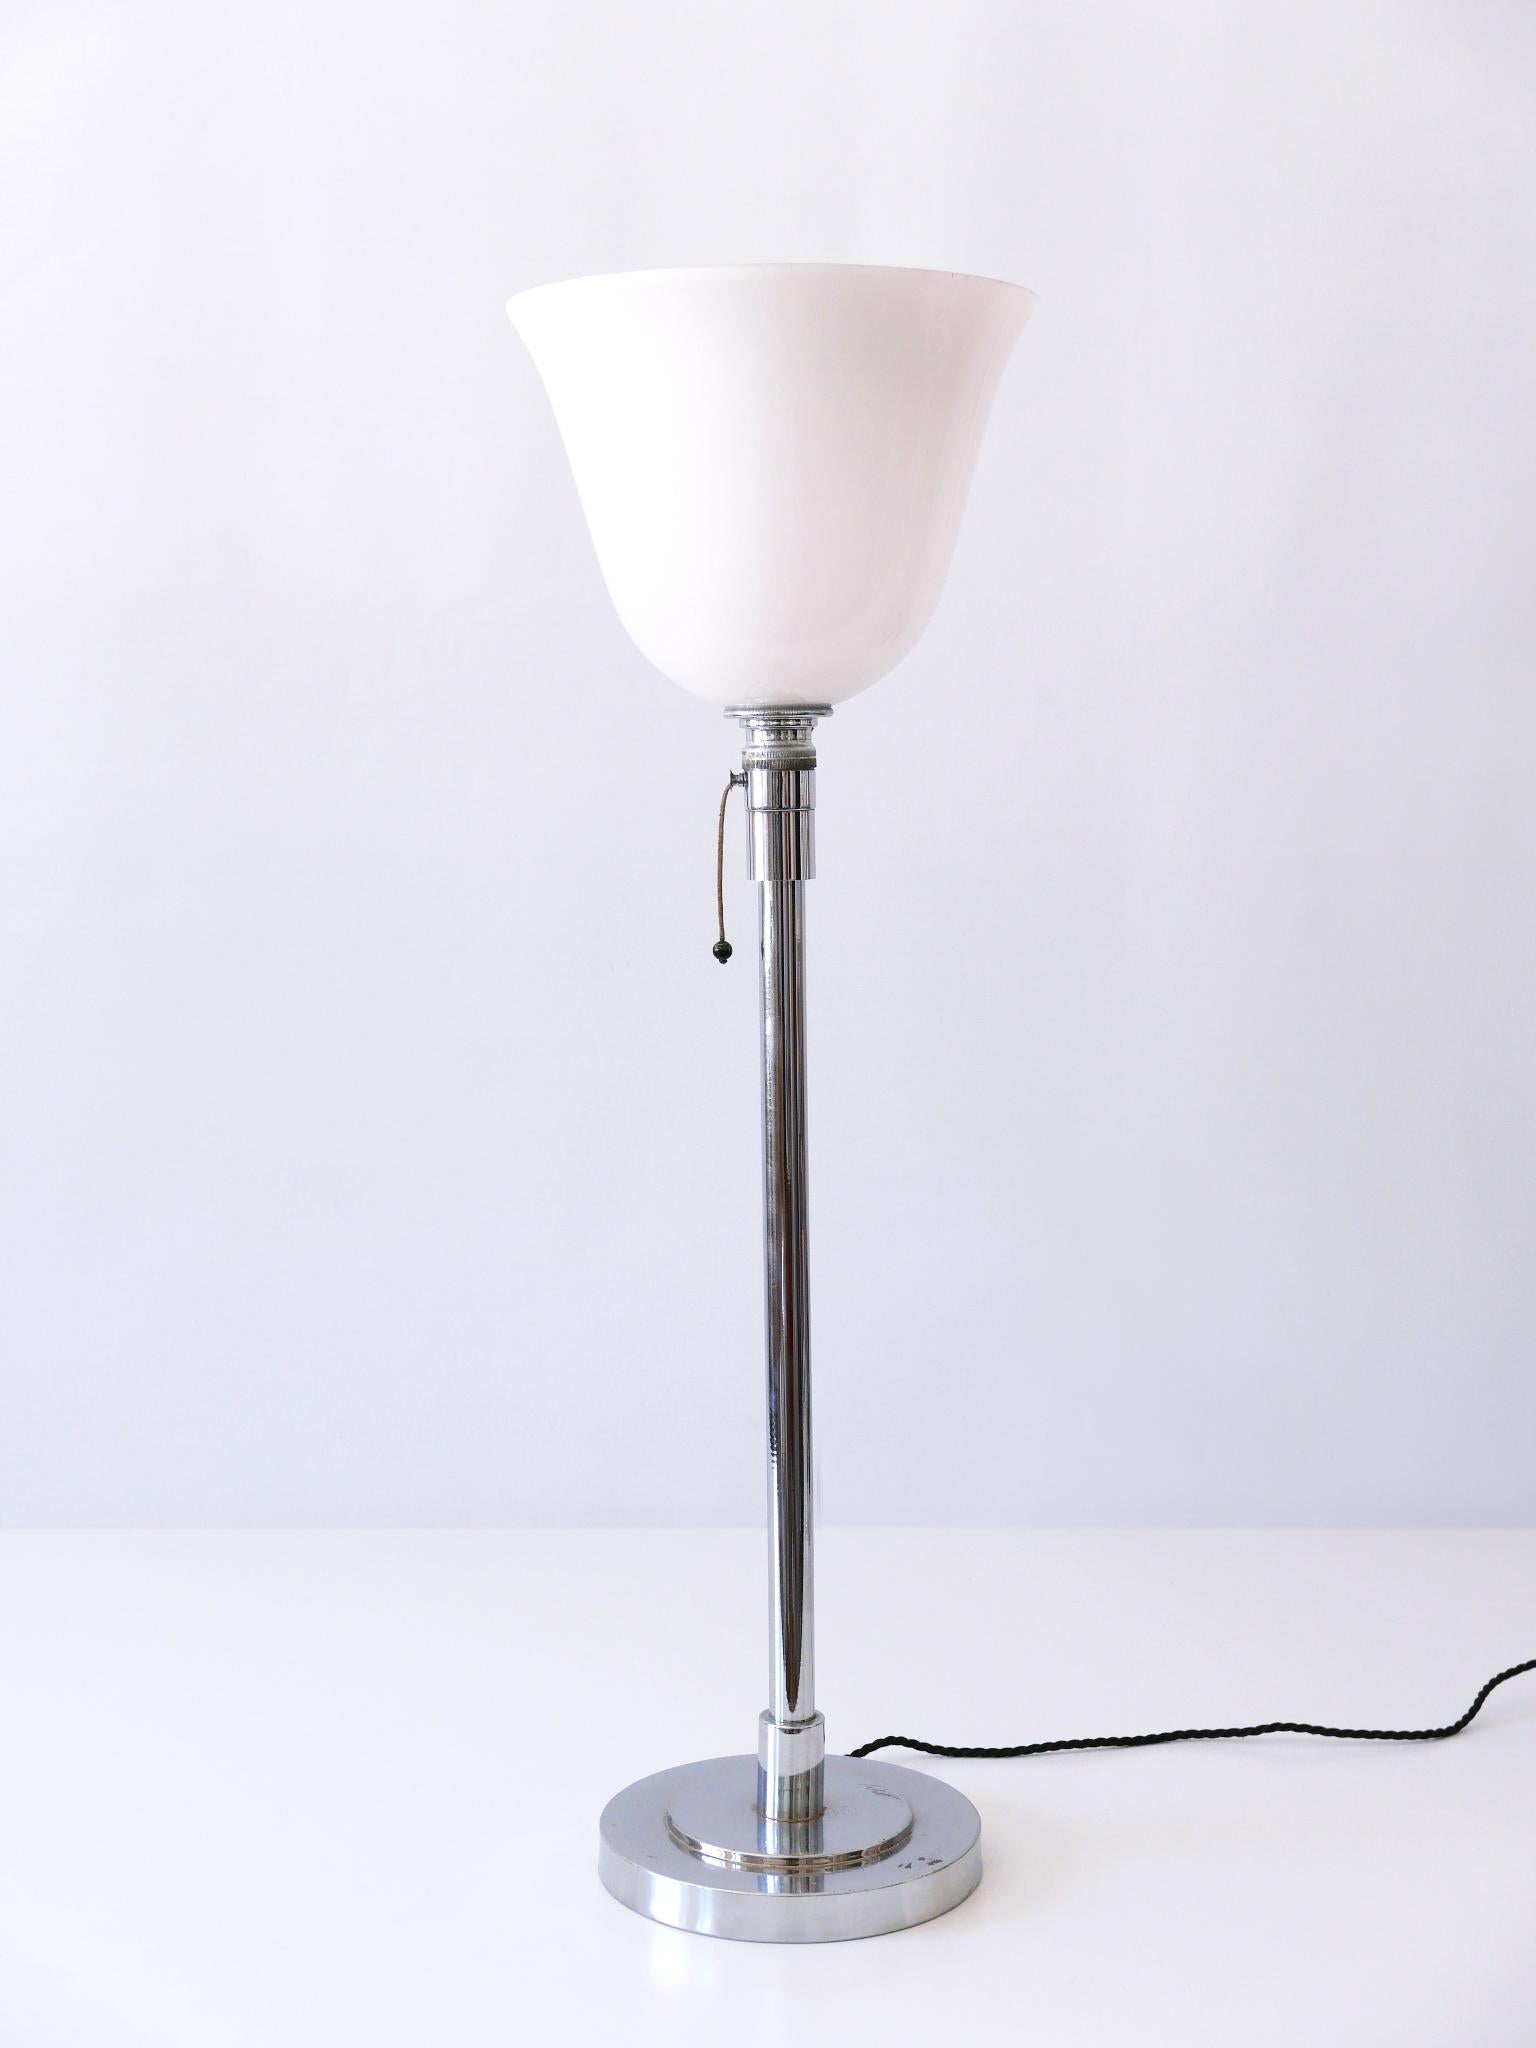 Mid-20th Century Elegant Art Deco Bauhaus Table Lamp or Floor Light by Mazda Paris, France, 1930s For Sale